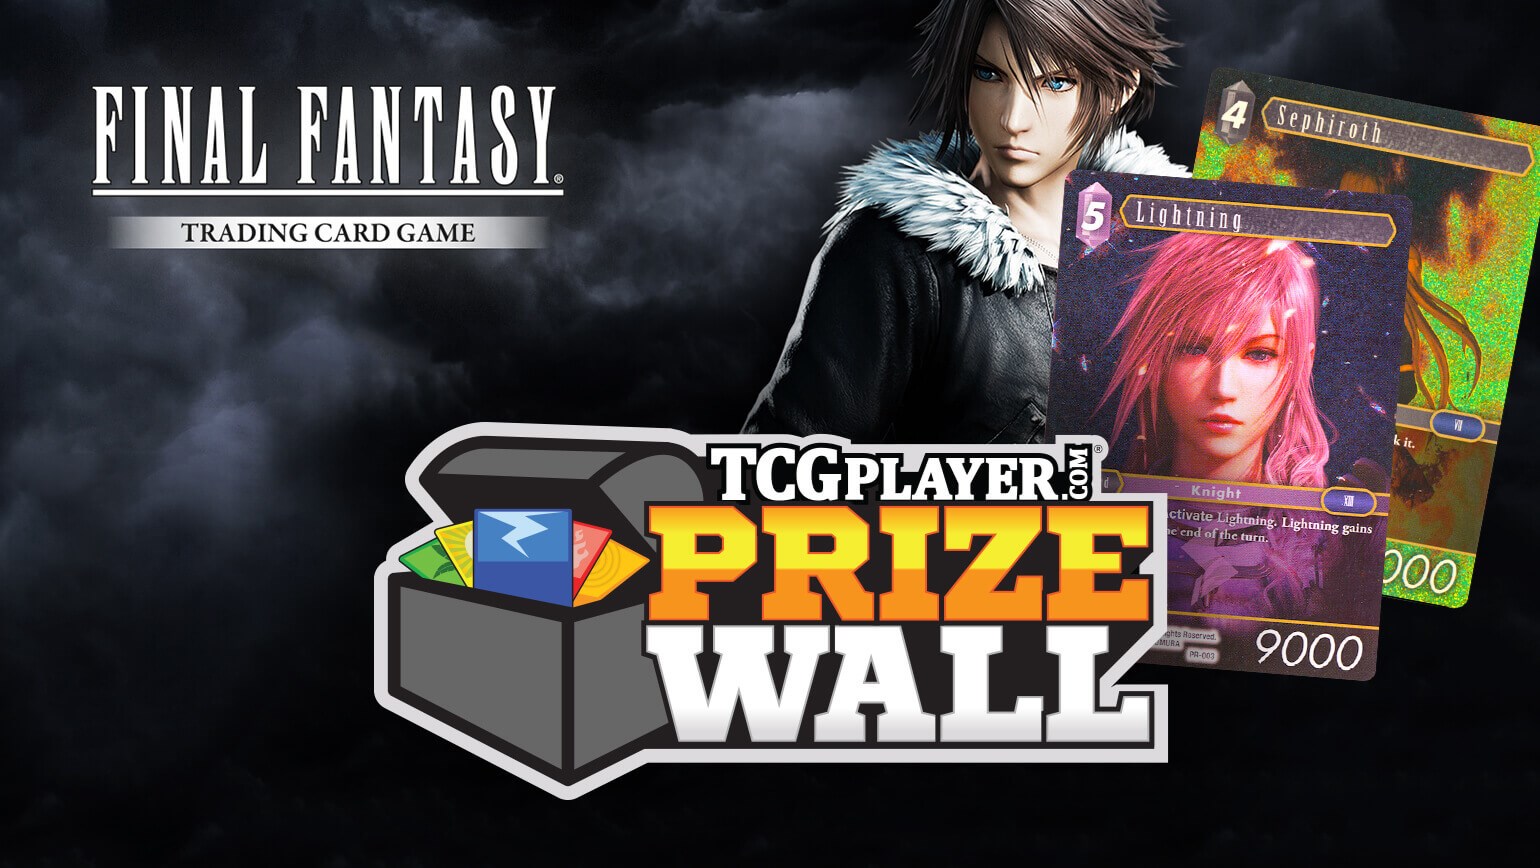 Final Fantasy TCG Prize Wall Promo